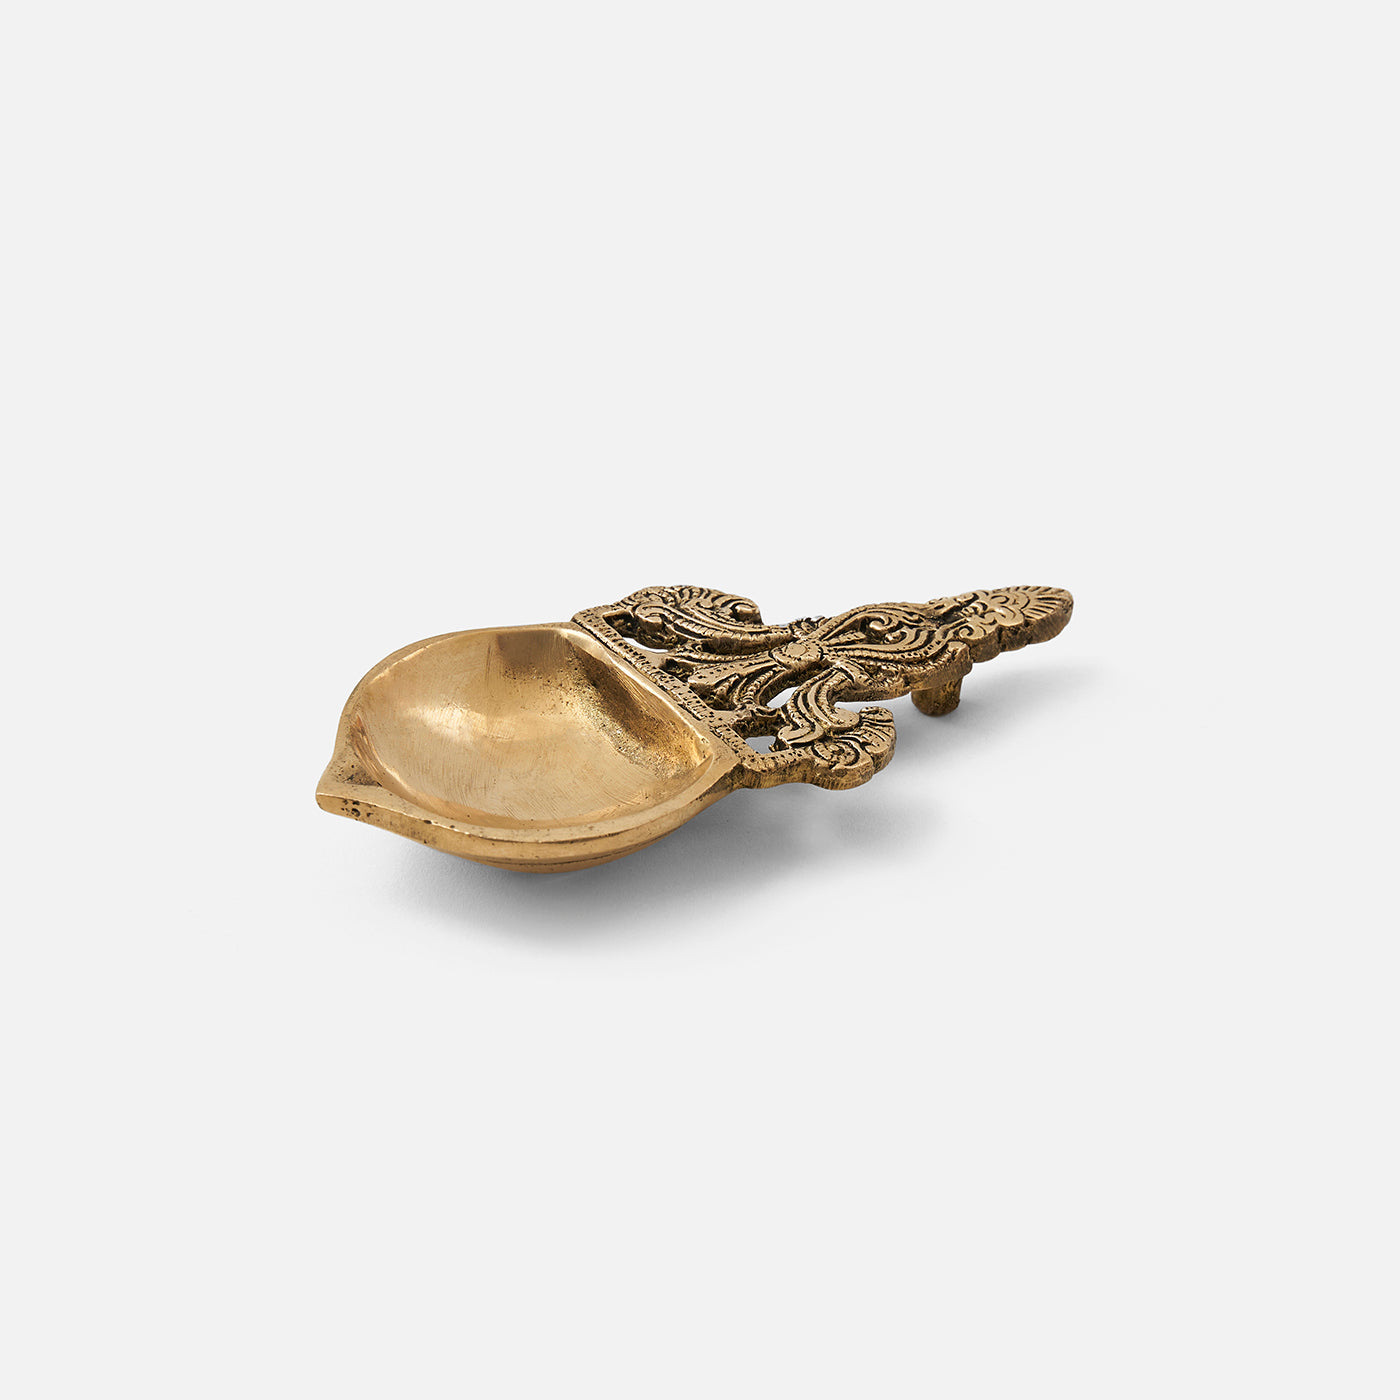 Indigenous Indian Brass Aarti Spoon